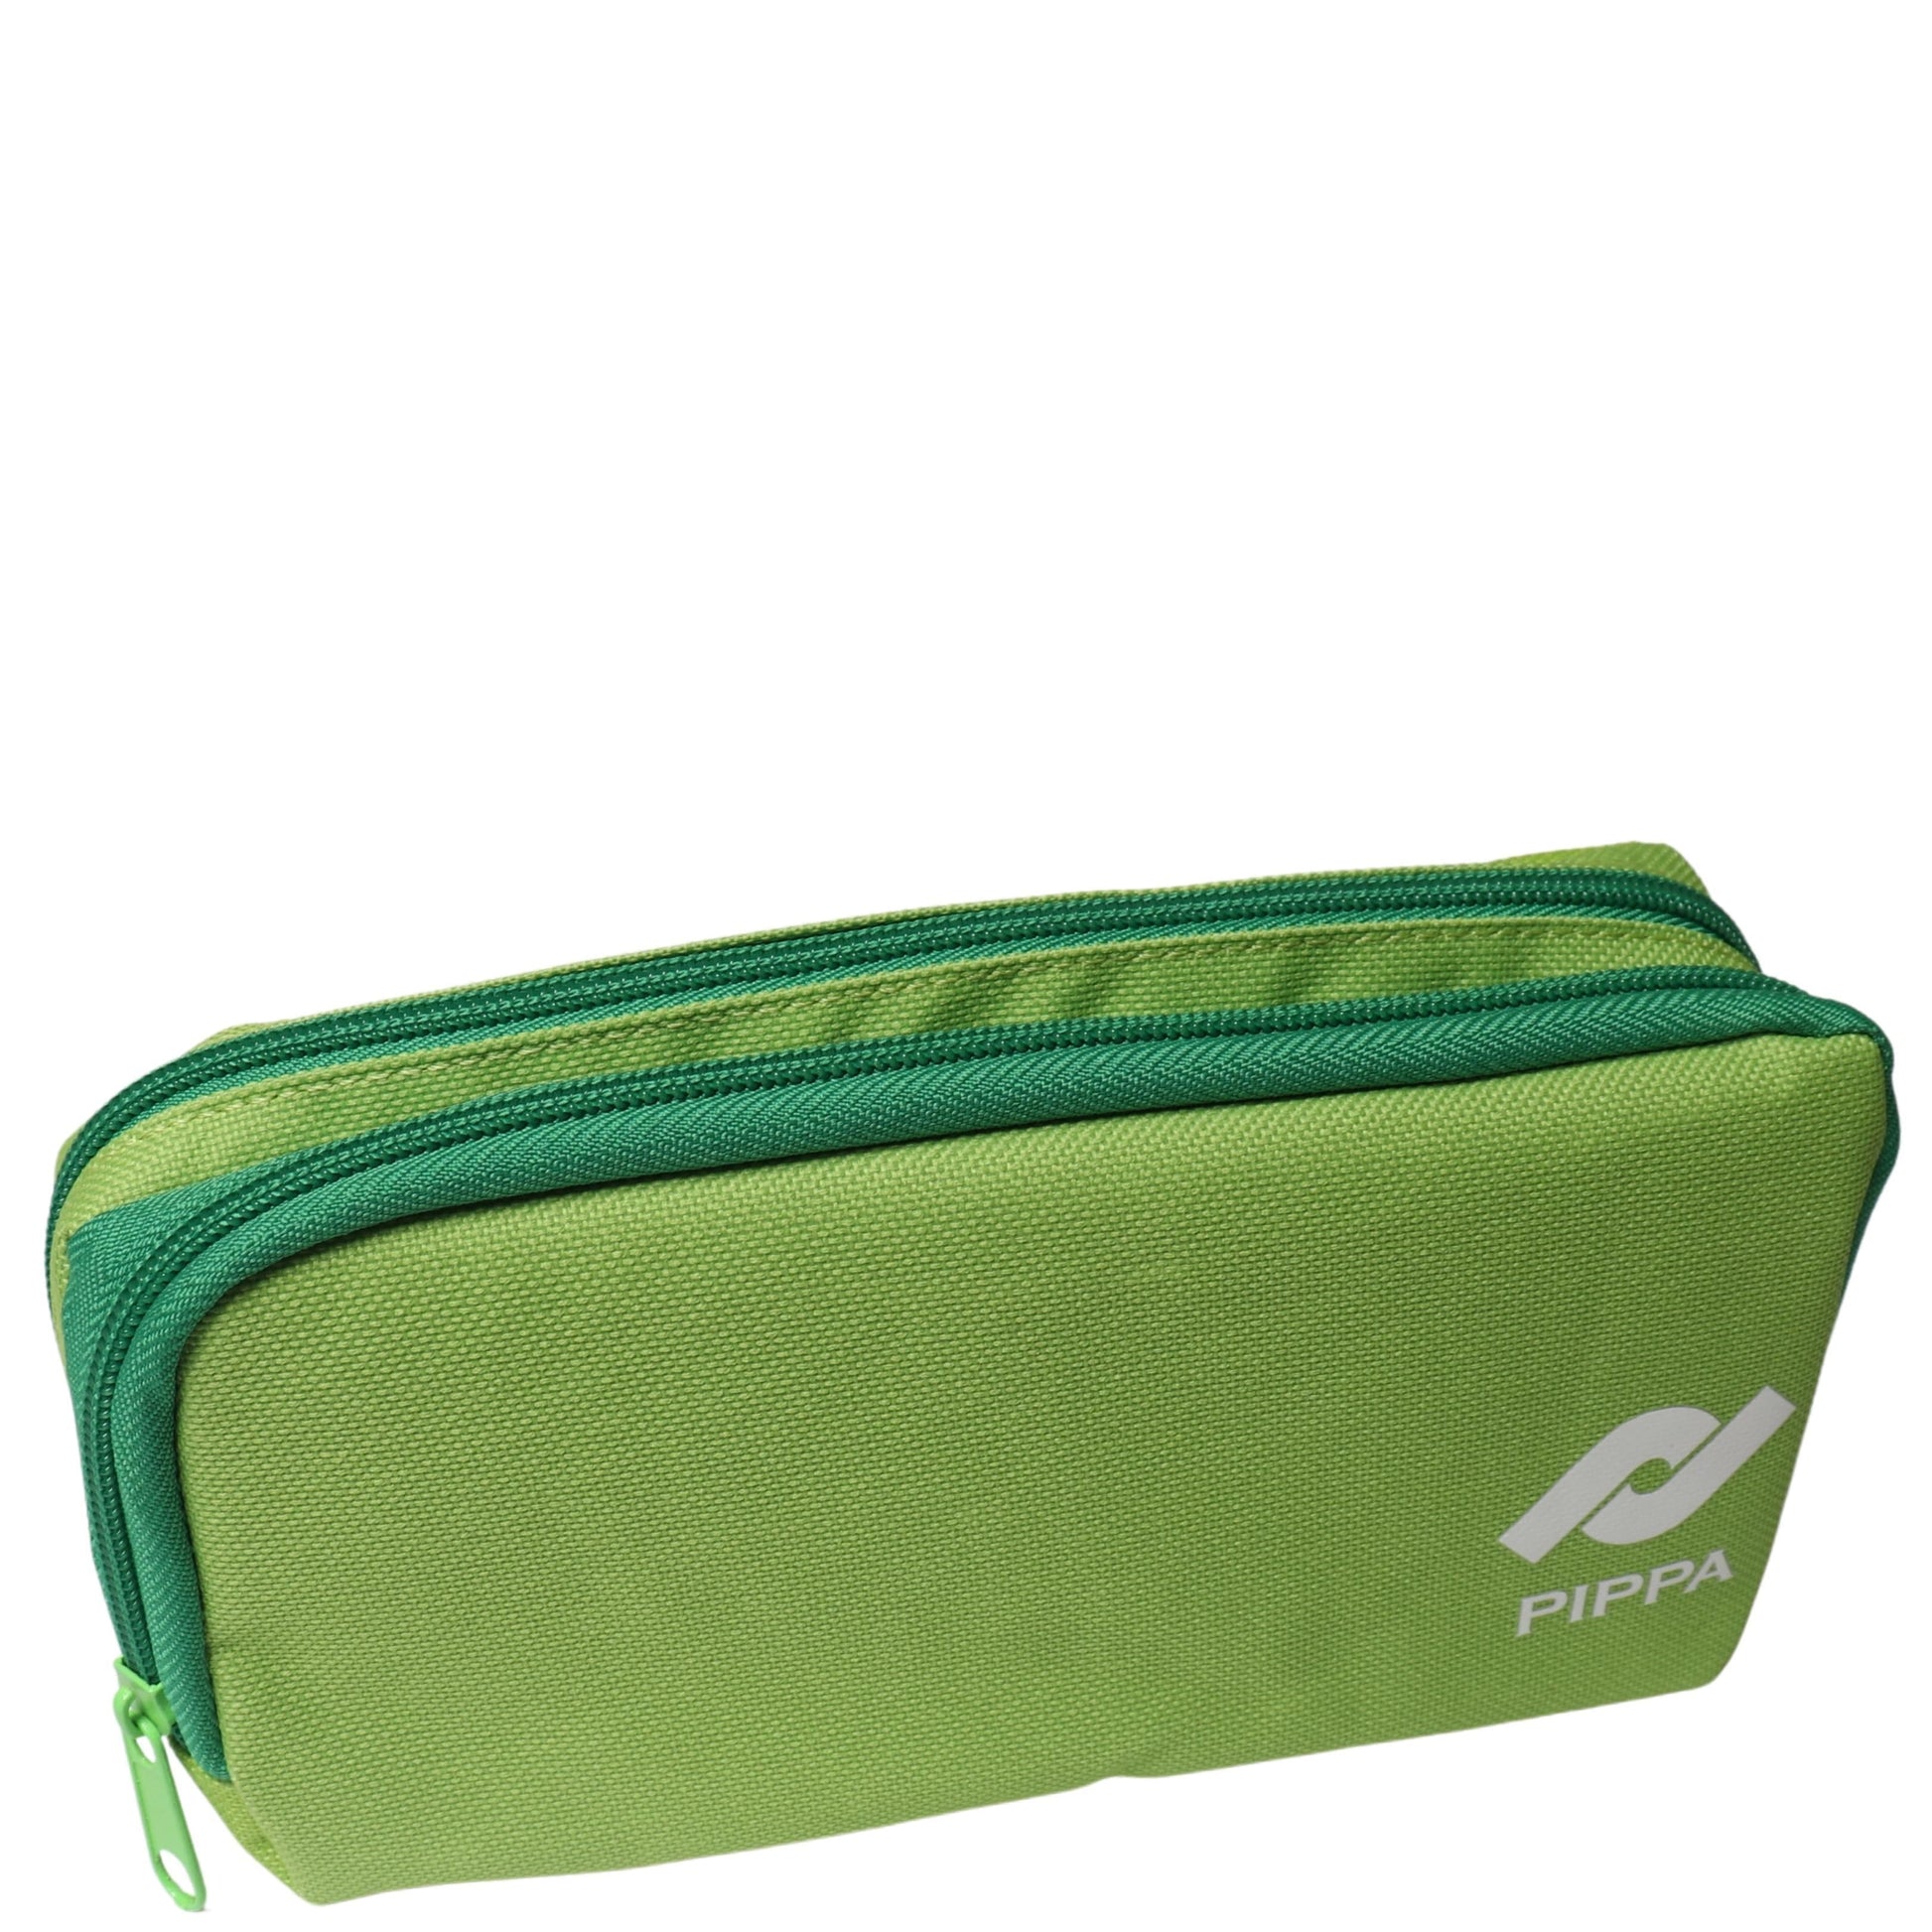 PIPPA School Bags & Supplies Green PIPPA - Pencil Case 2 Zipper